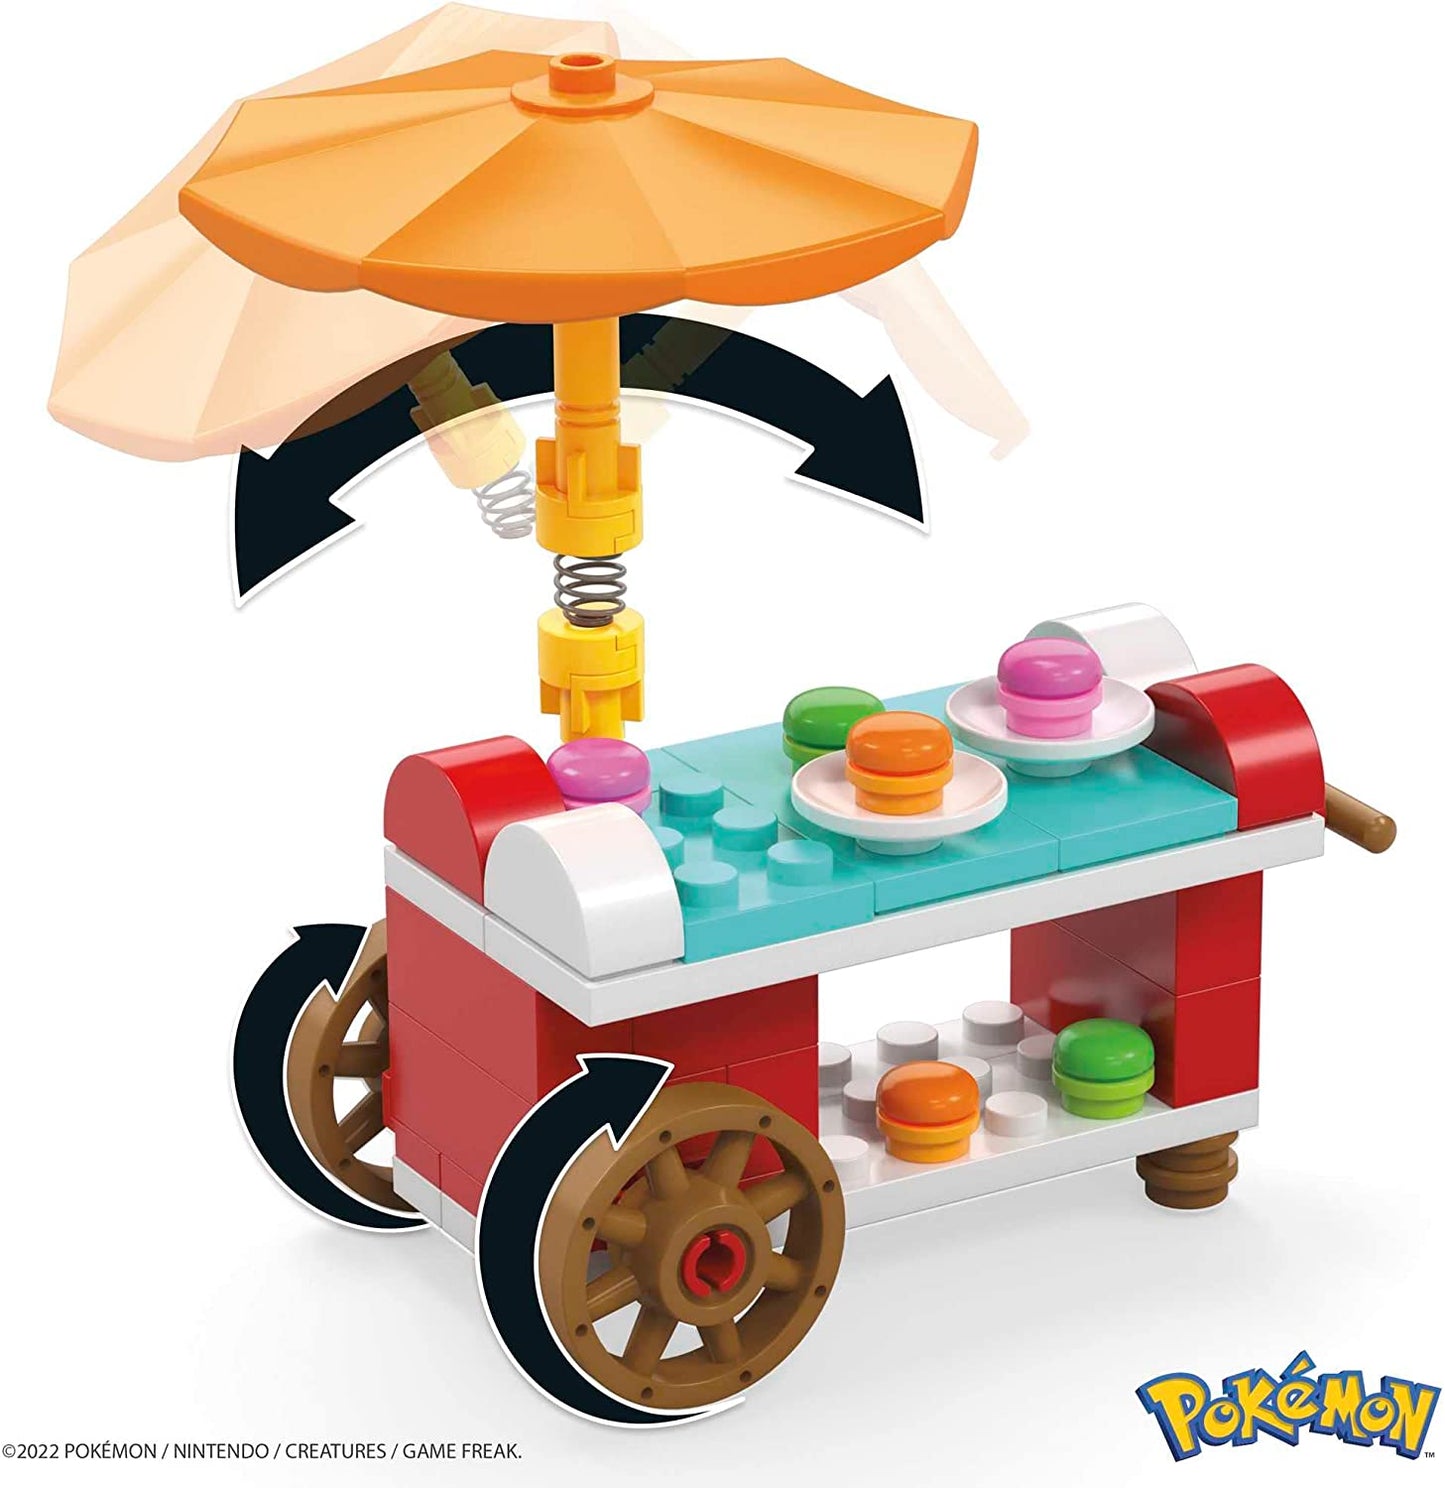 Mega Construx HDL80 - Pokémon Picknick Bauset 193 Teile Evoli und Lucario Spielzeug